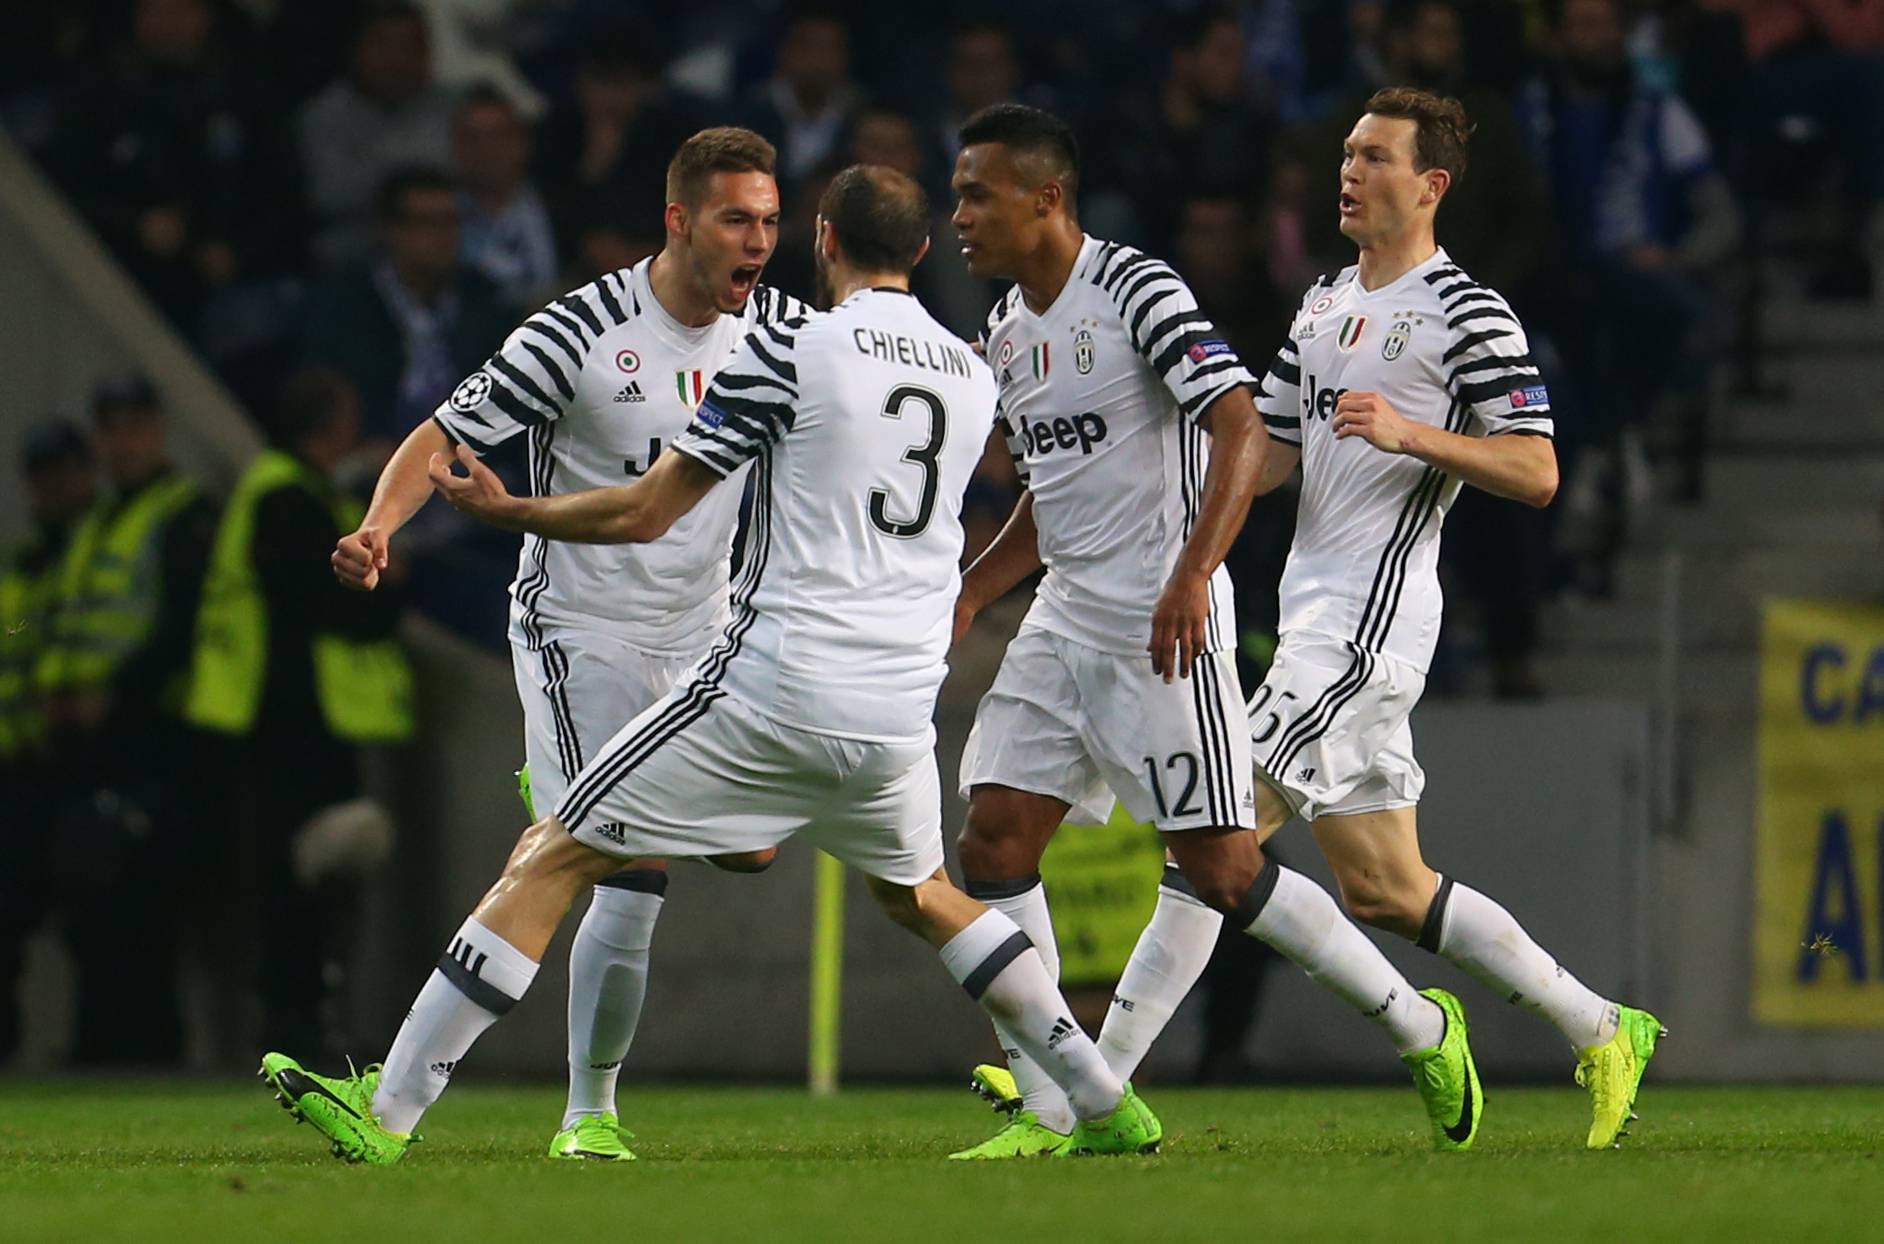 Juventus' Marko Pjaca celebrates scoring their first goal with teammates